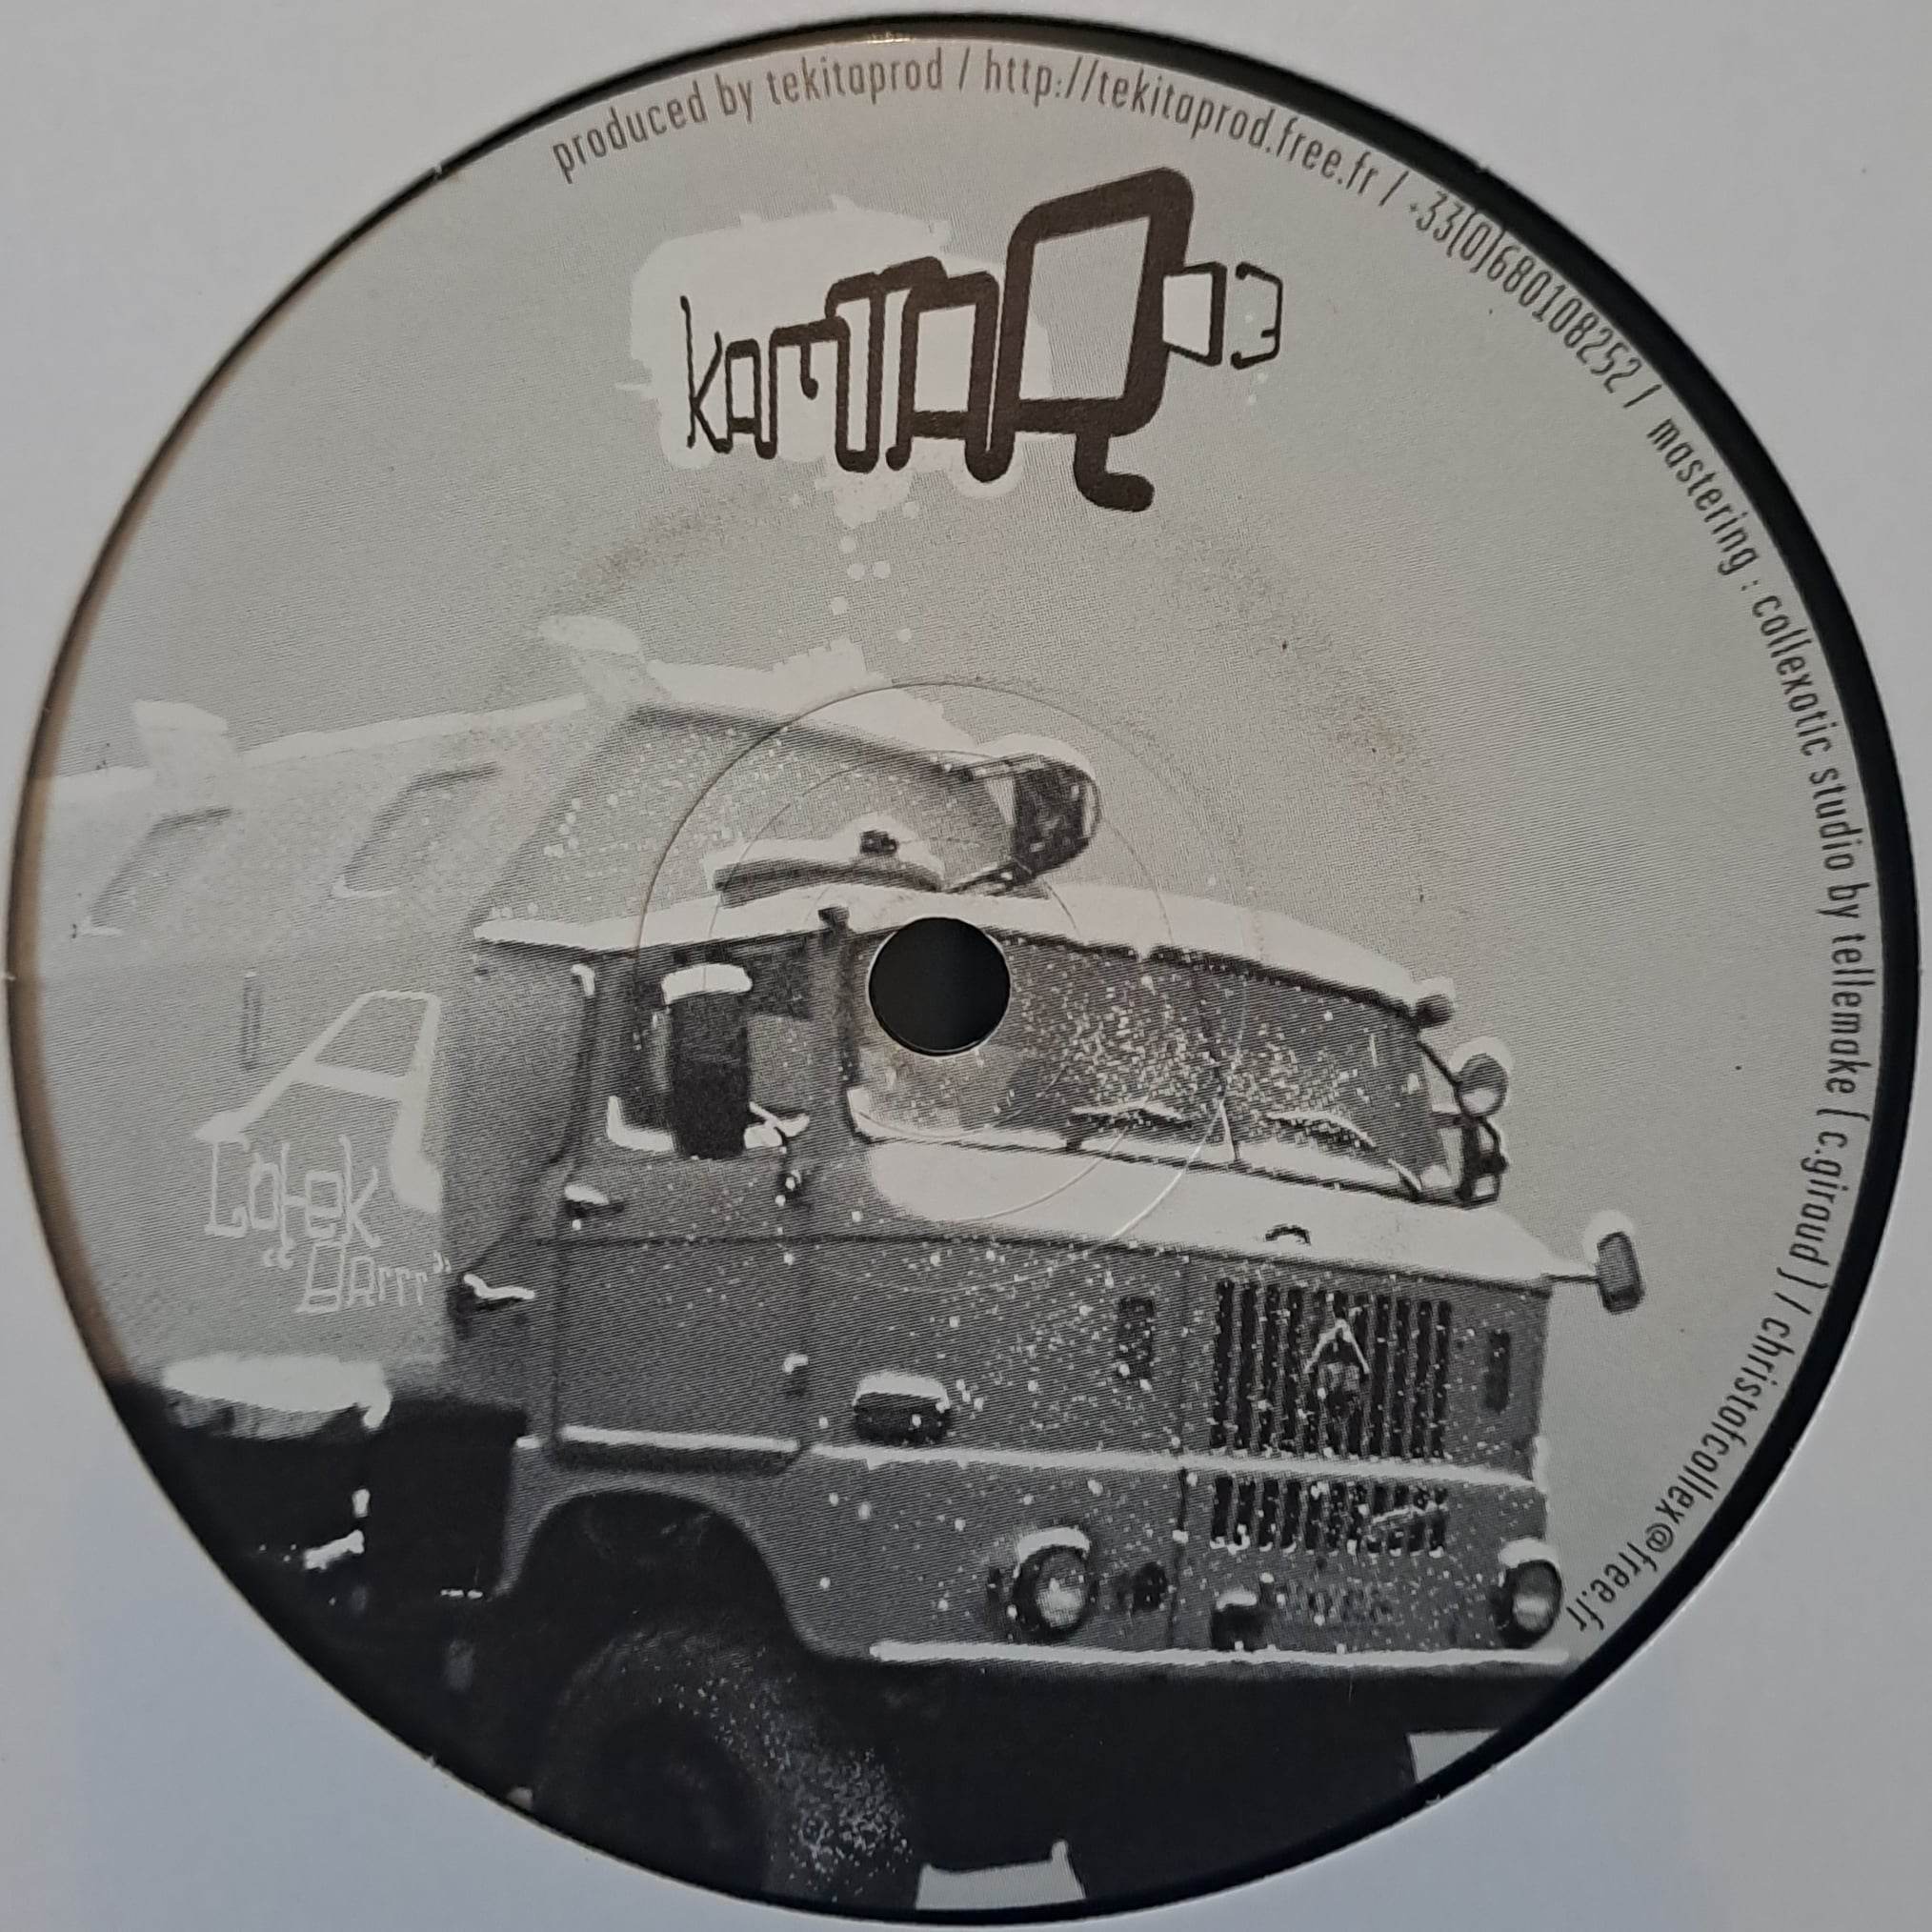 Kamtar 03 - vinyle freetekno